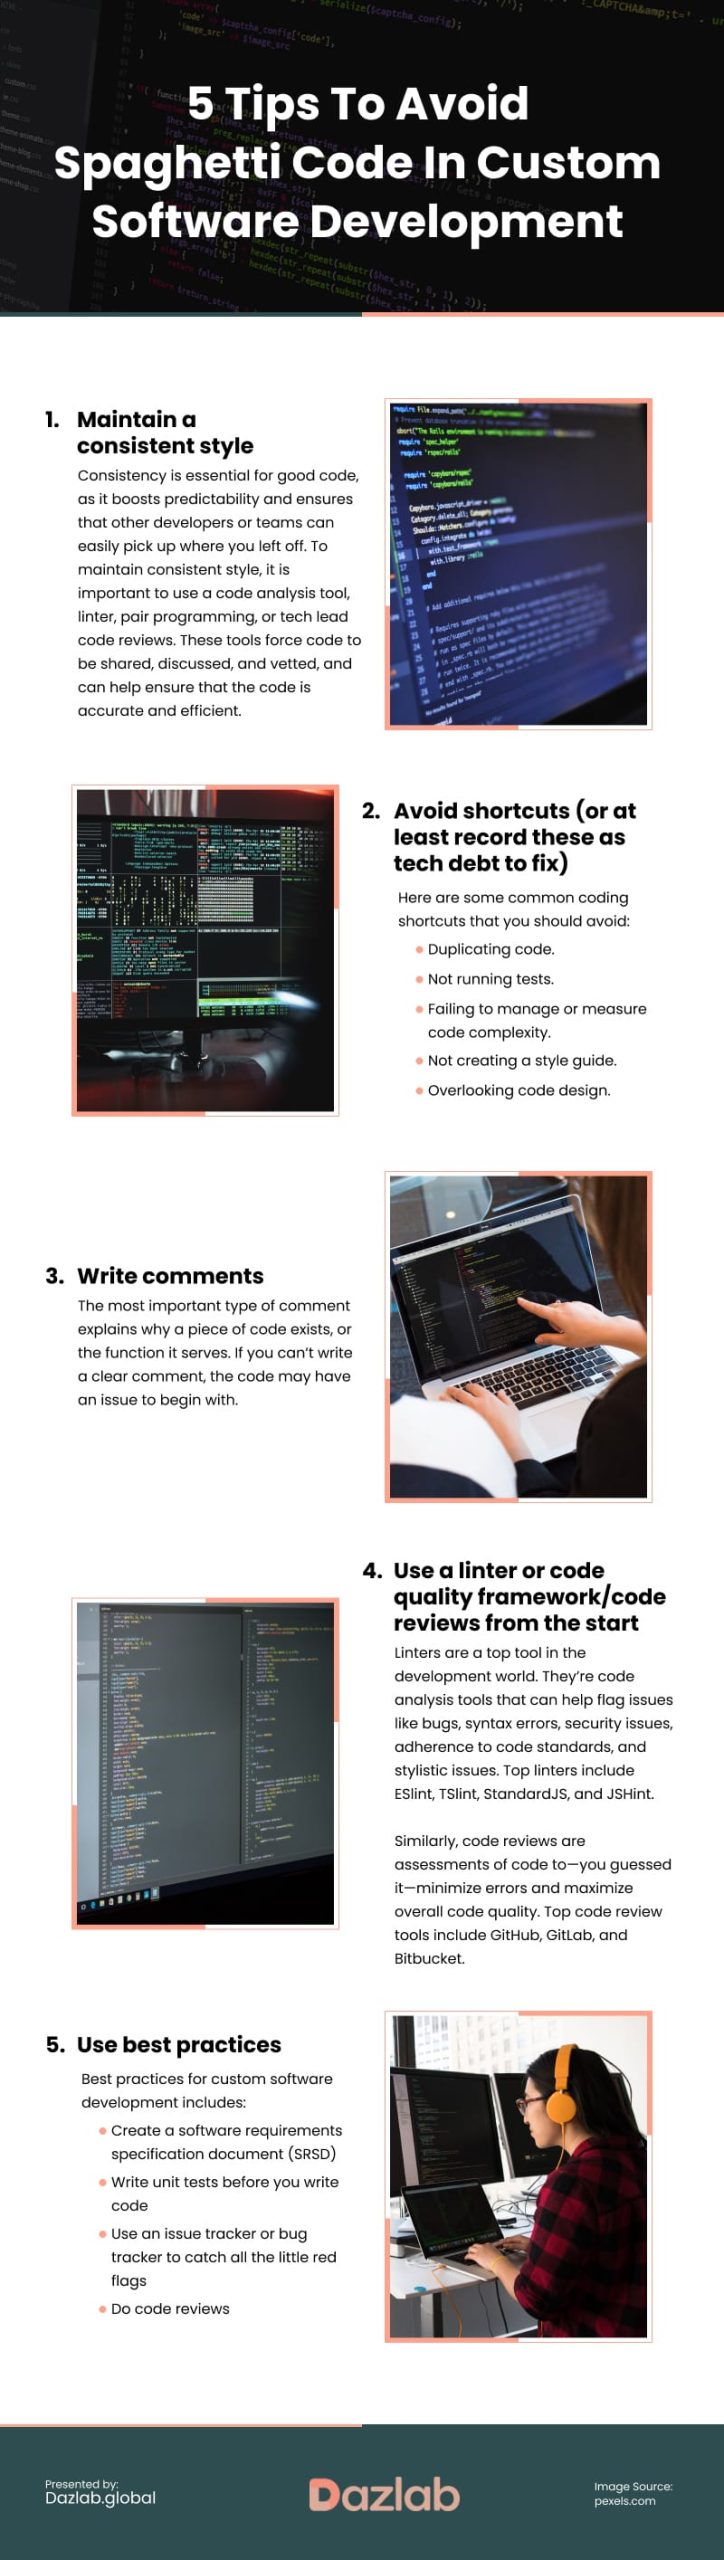 5 Tips To Avoid Spaghetti Code In Custom Software Development Infographic